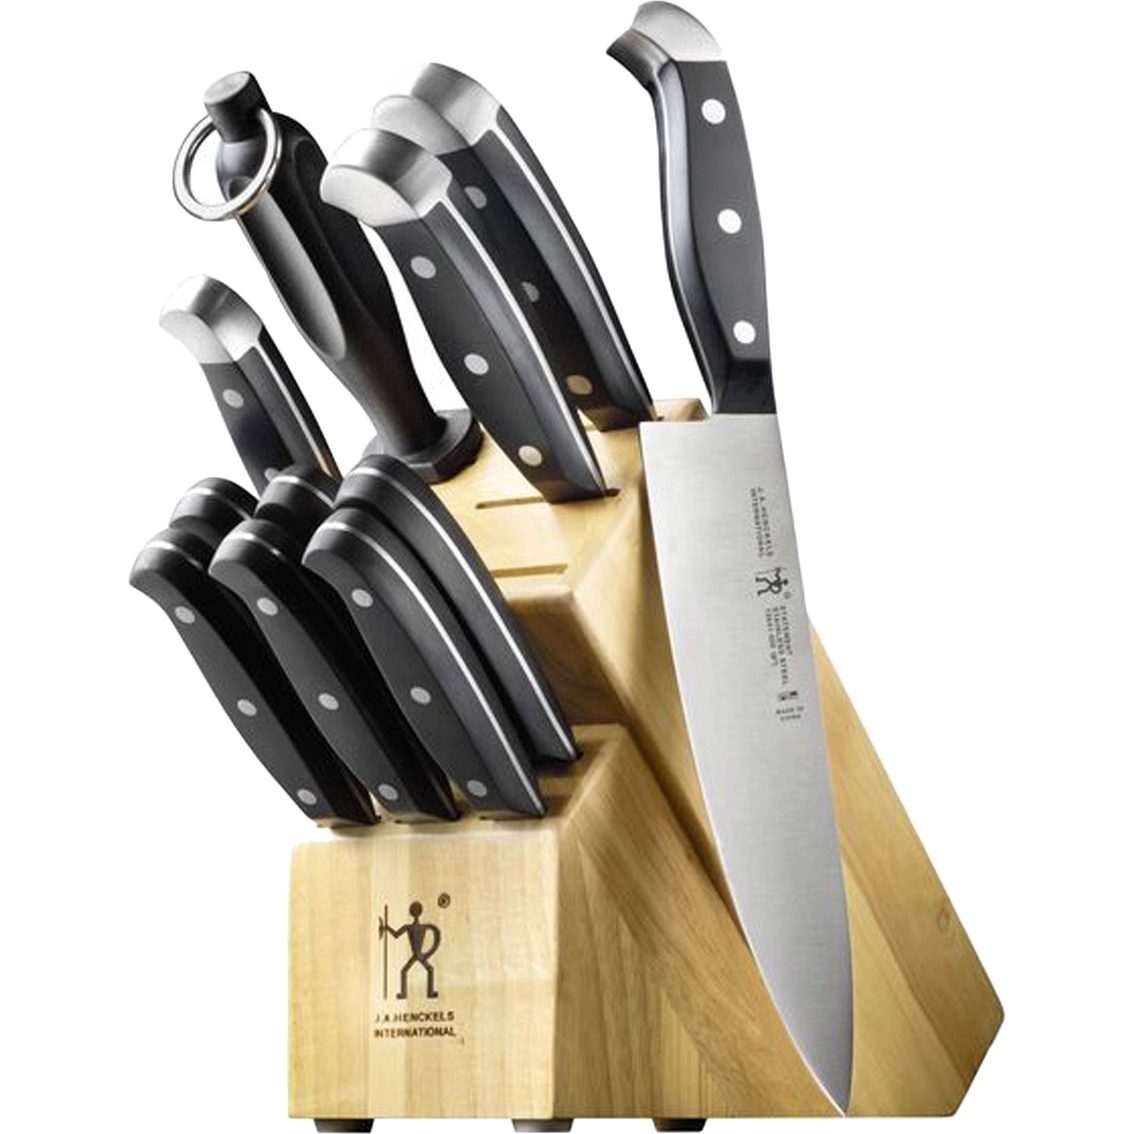 Zwilling J.a. Henckels International Classic 4 Pc. Steak Knife Set, Cutlery, Household